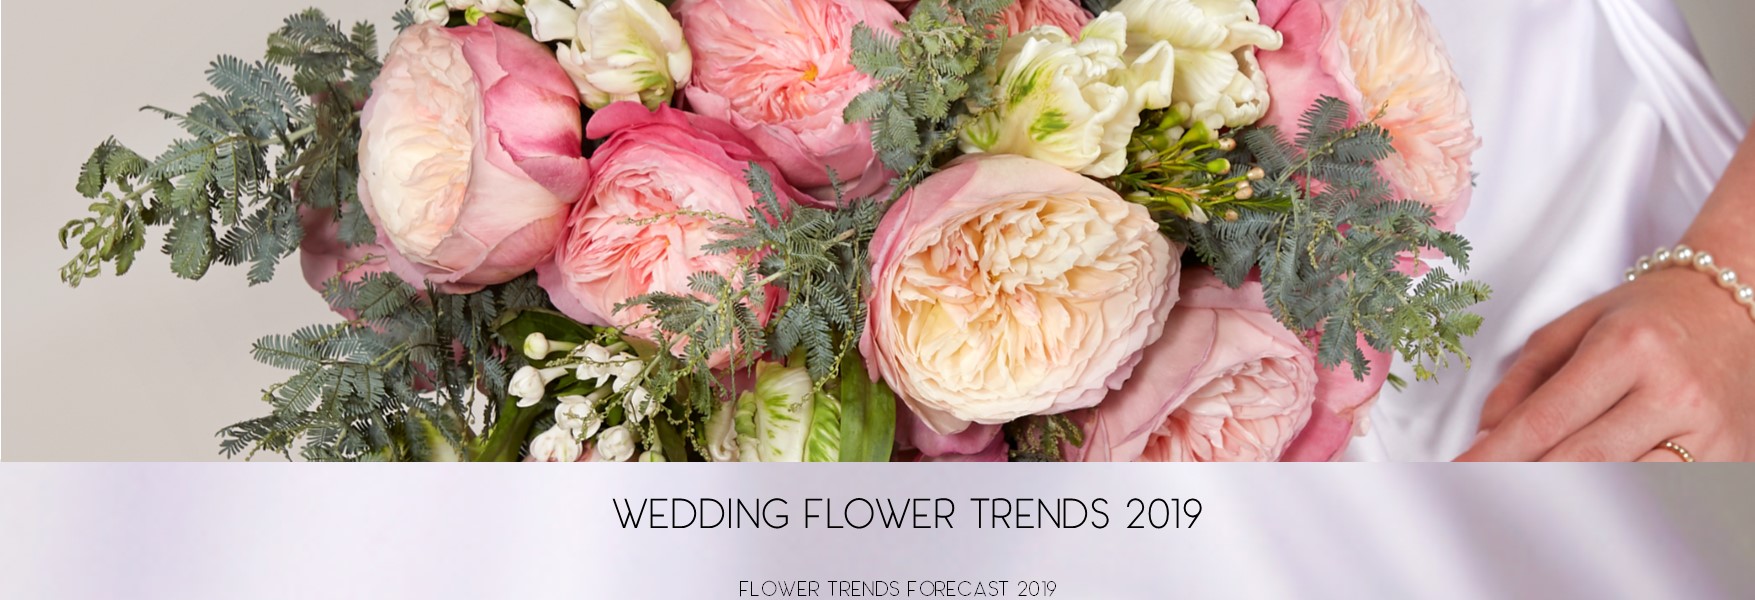 WeddingFlower Trends2019Banner 1170x400